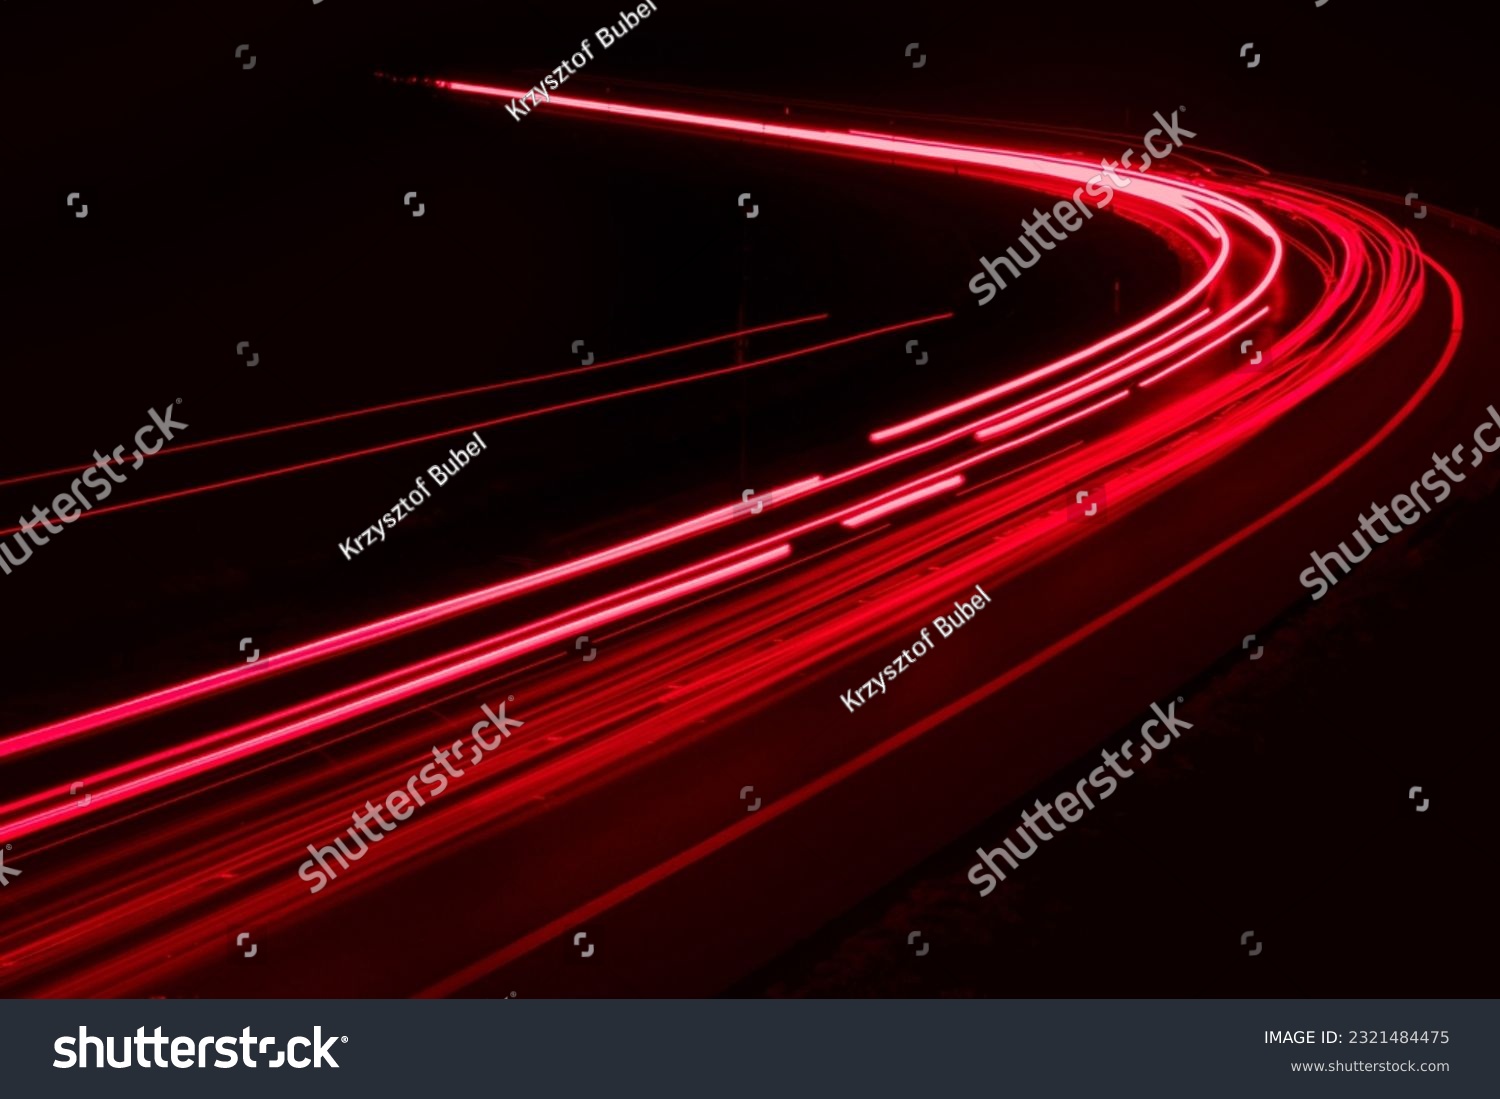 lights of cars driving at night. long exposure #2321484475